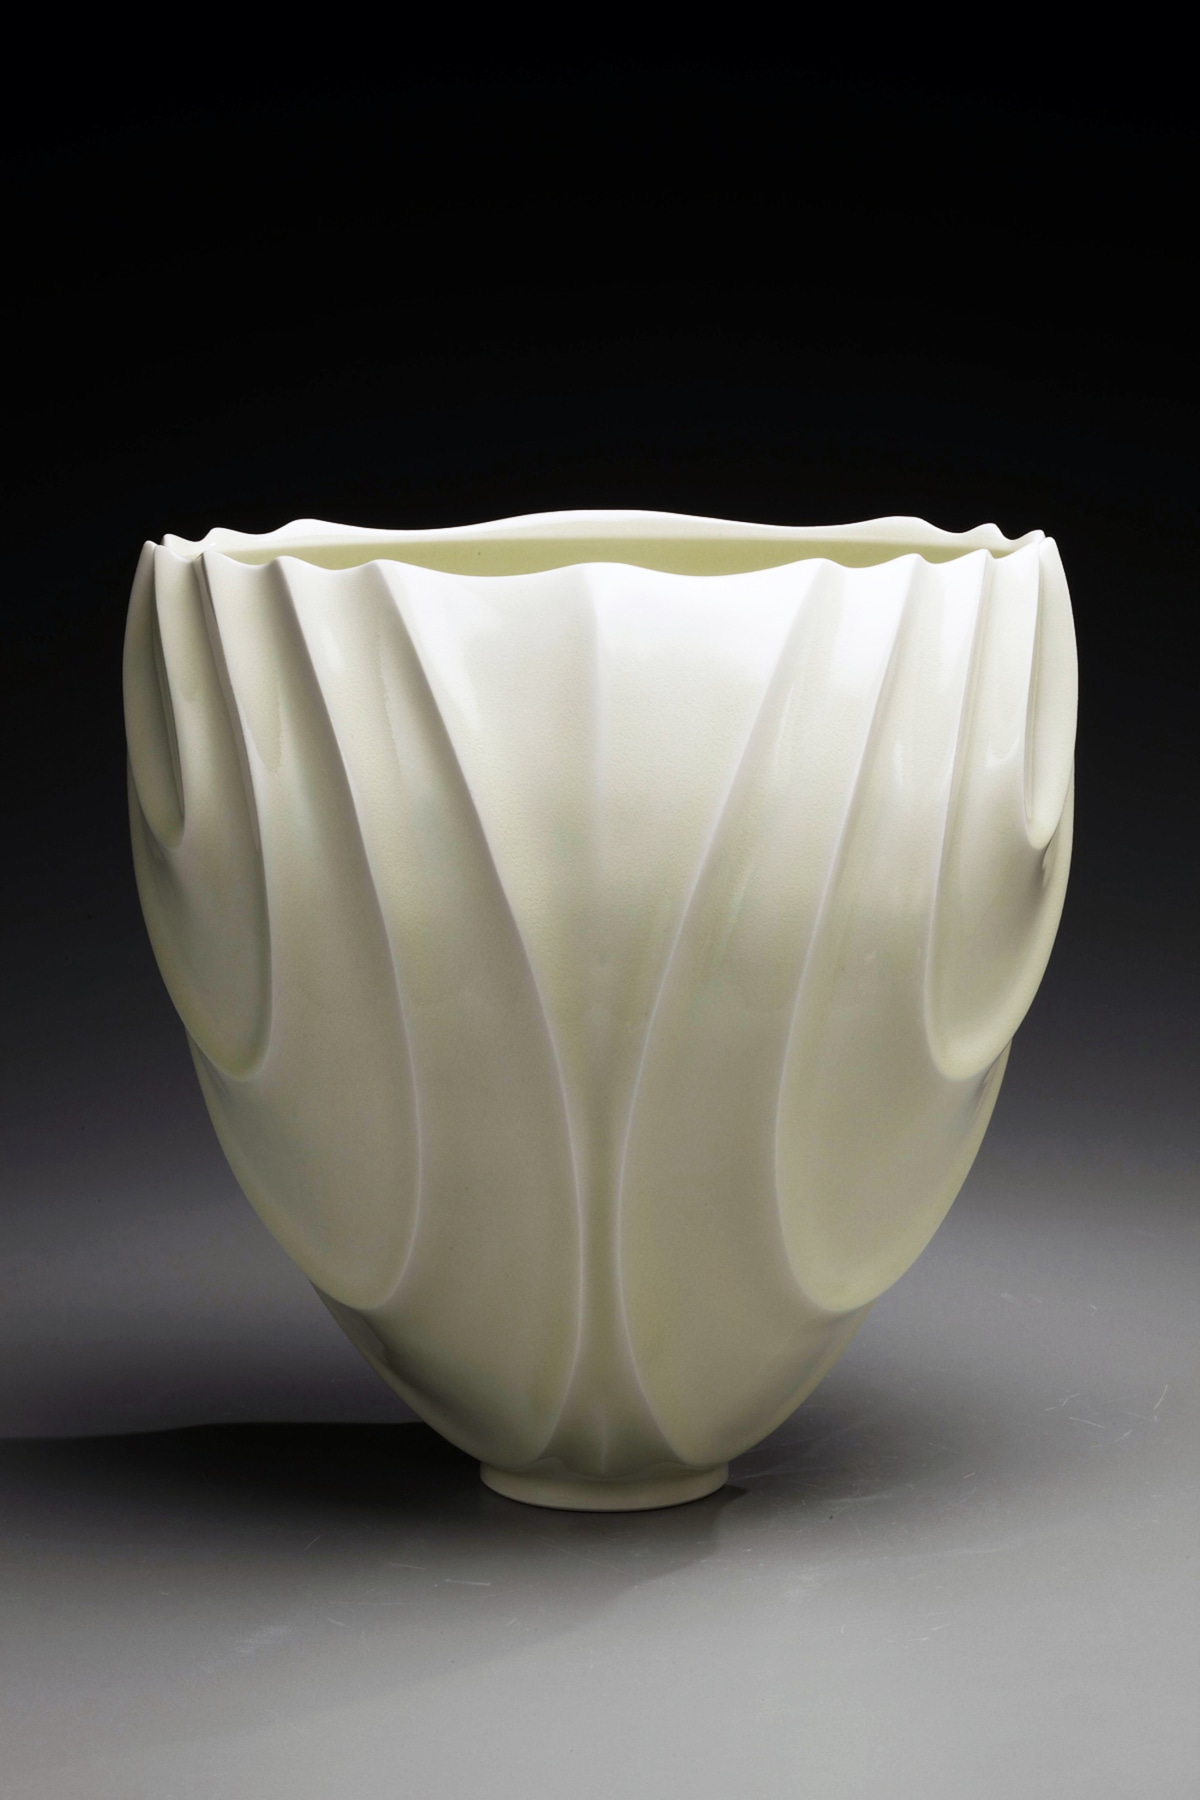 Ono Kotaro, Tall pale yellow celadon-glazed vase, 2009 Glazed porcelain, Japanese contemporary ceramics